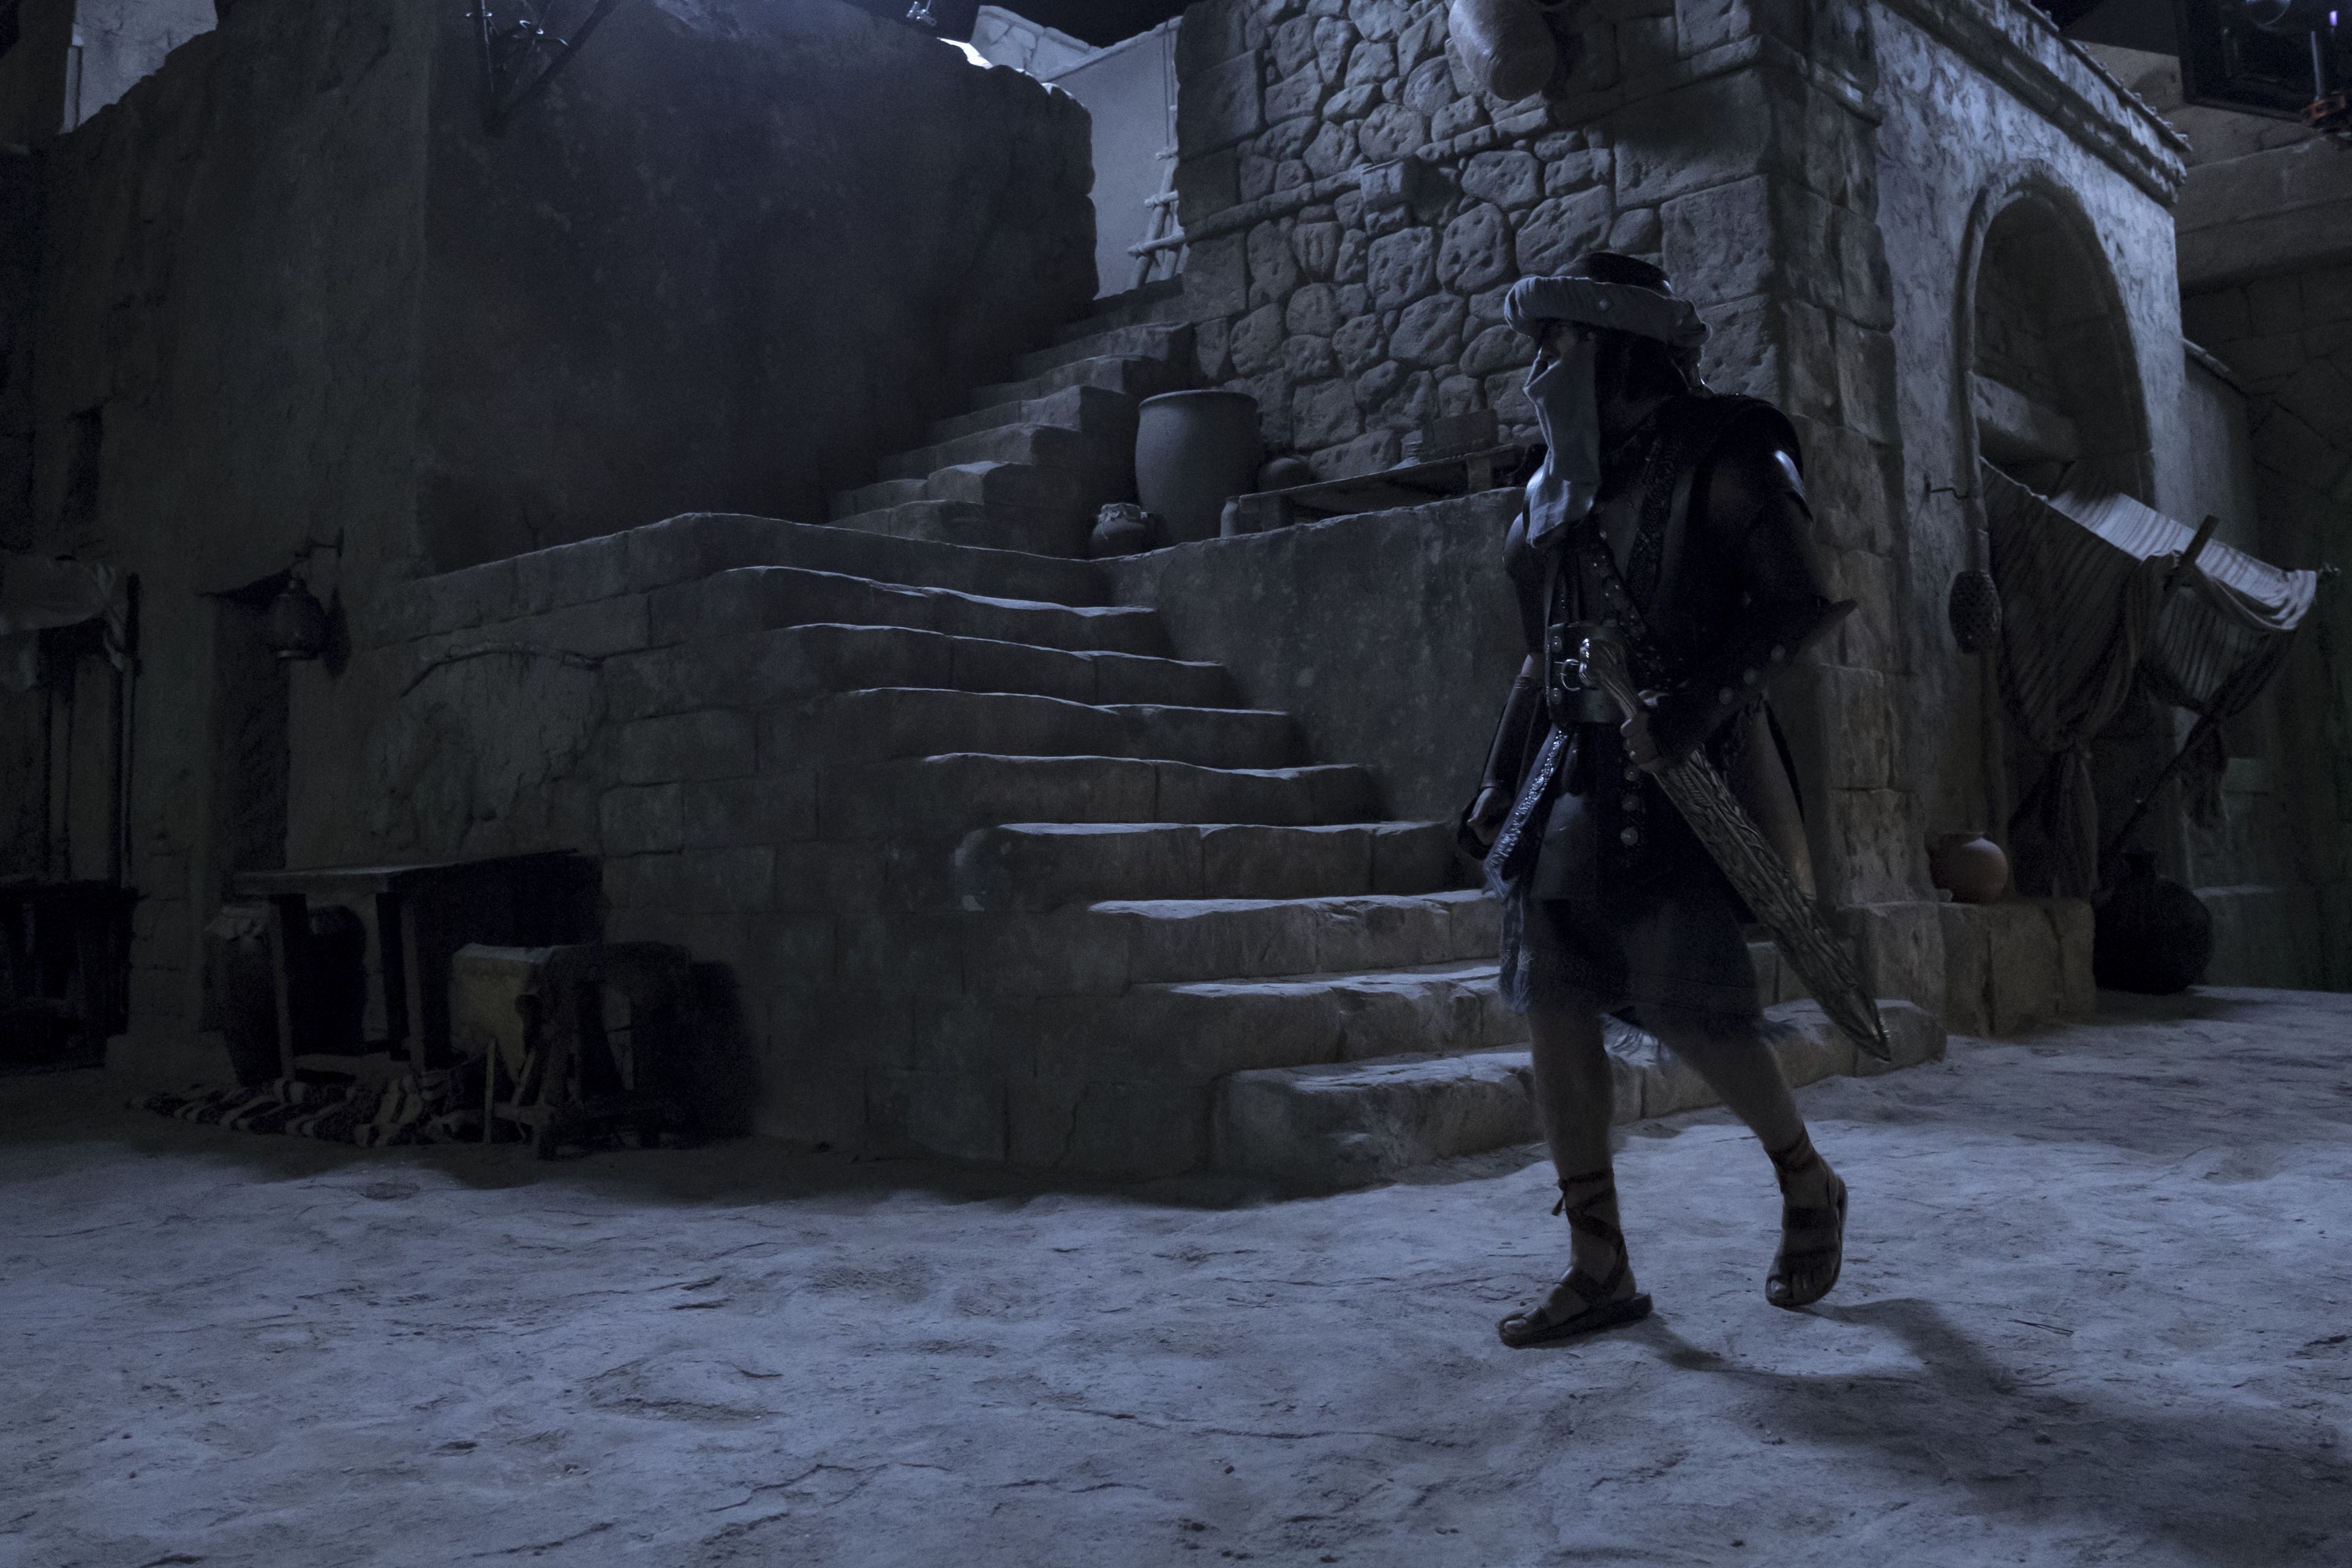 Nephi, disguised as Laban, walks the darkened streets of Jerusalem.